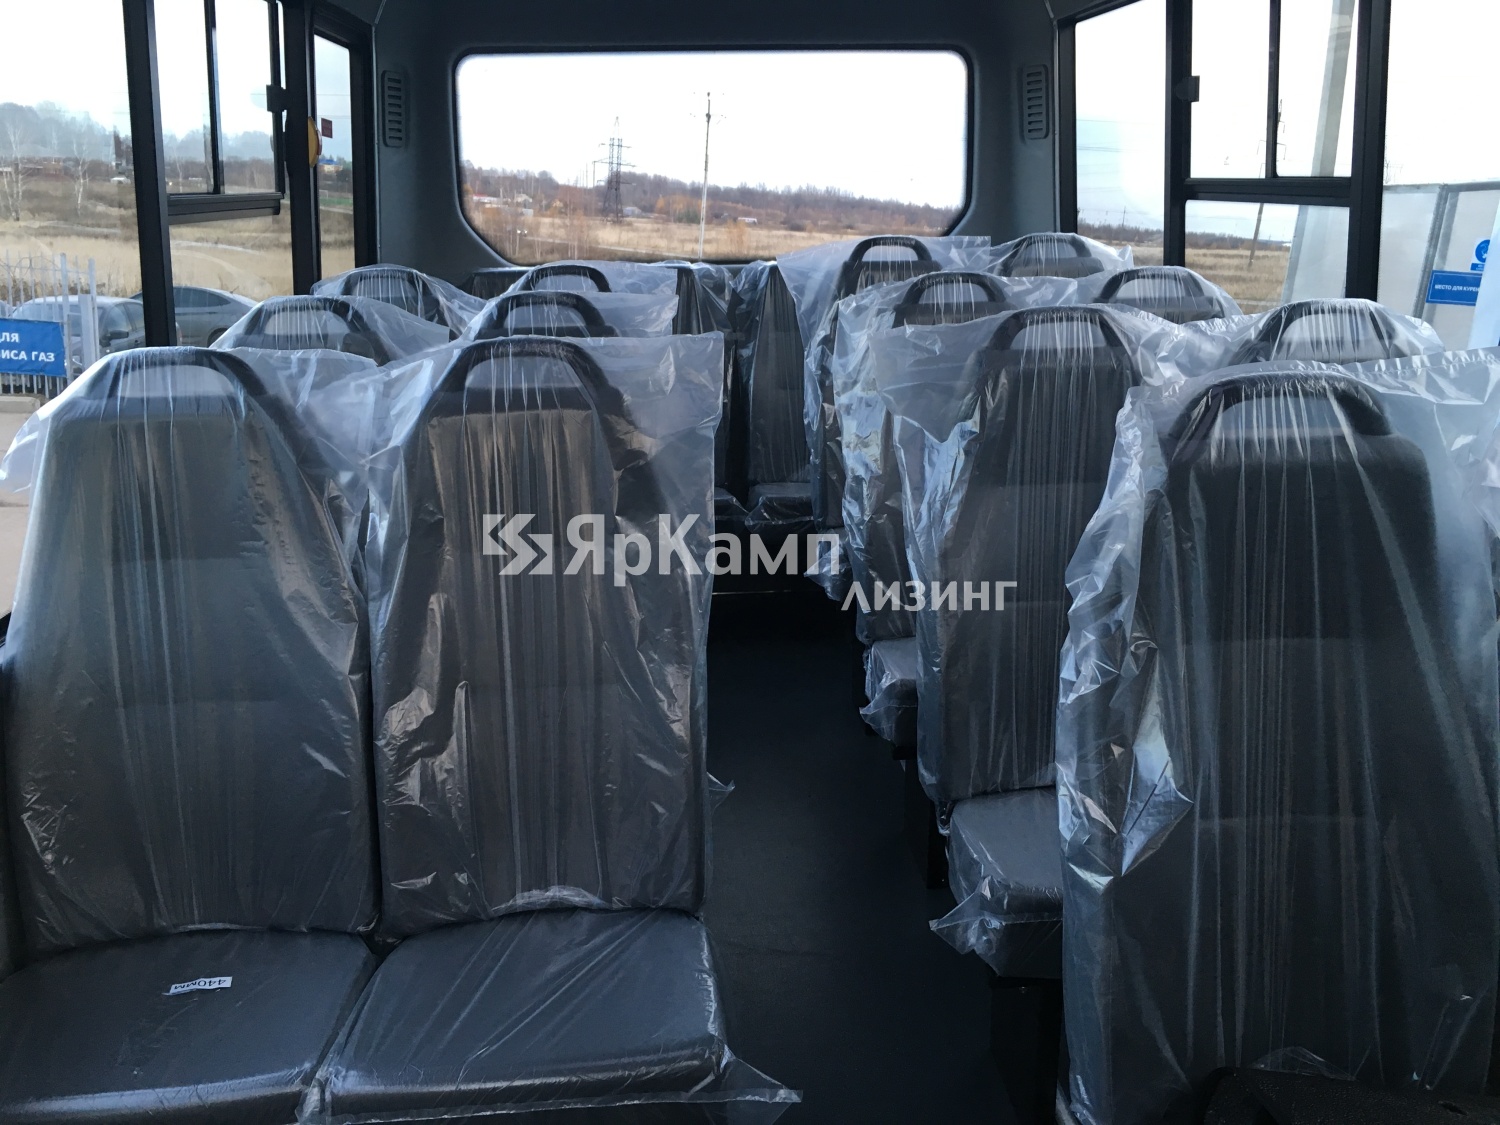 Произведена отгрузка на условиях лизинга двух автобусов ГАЗ А64R42